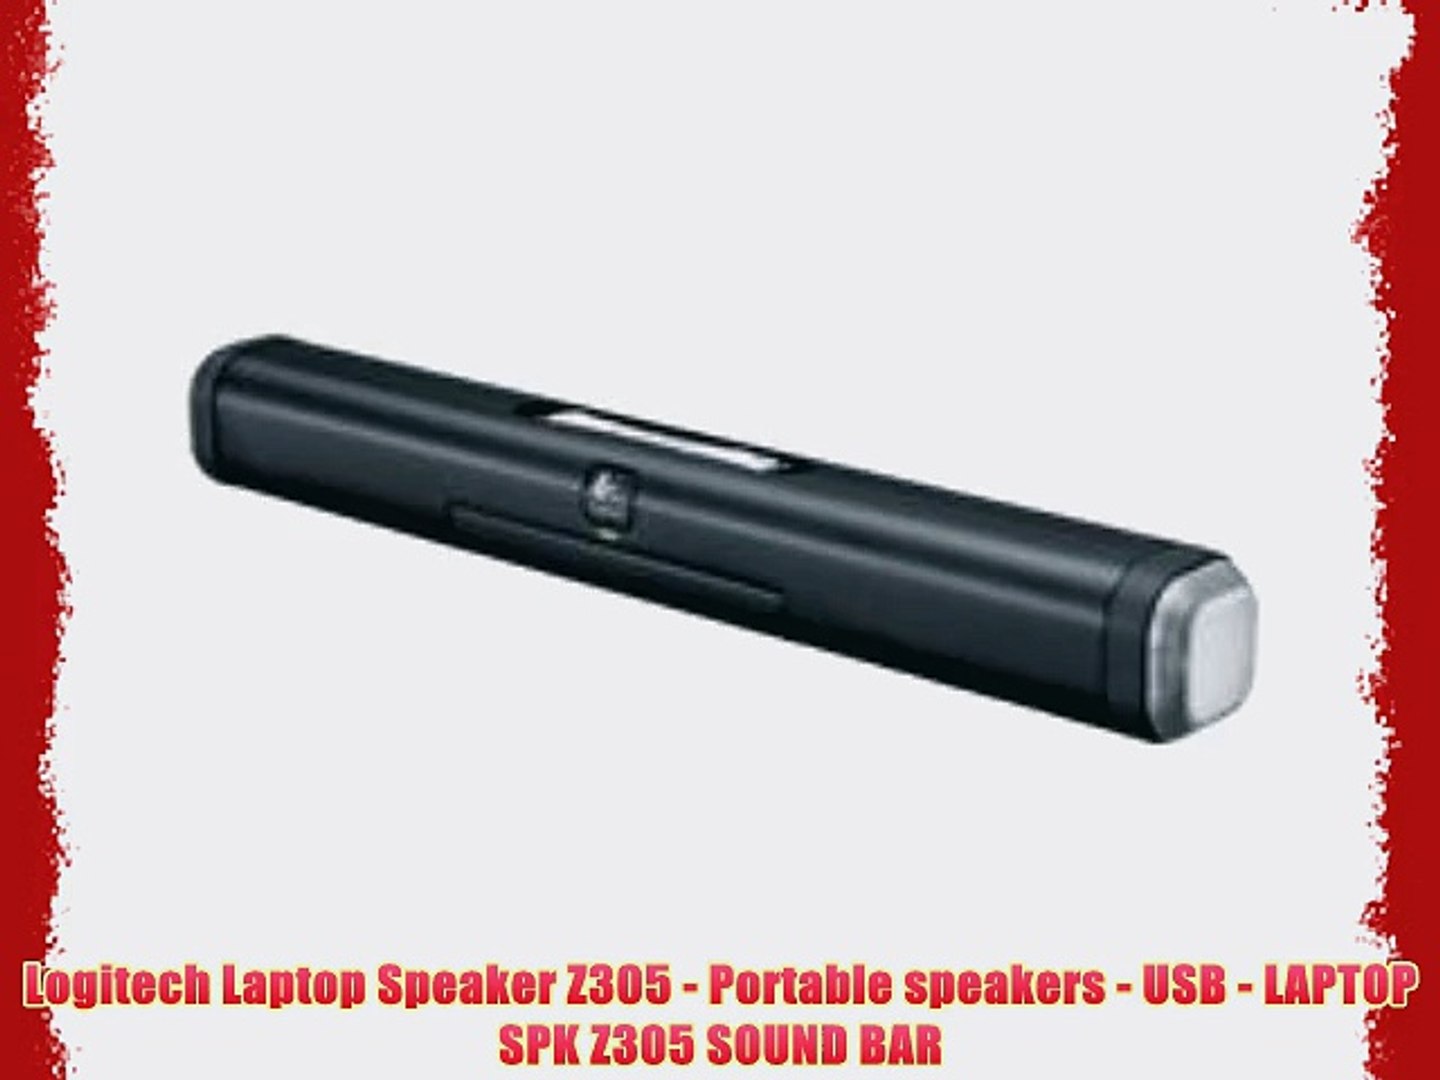 Logitech Laptop Speaker Z305 - Portable speakers - USB - LAPTOP SPK Z305  SOUND BAR - video Dailymotion